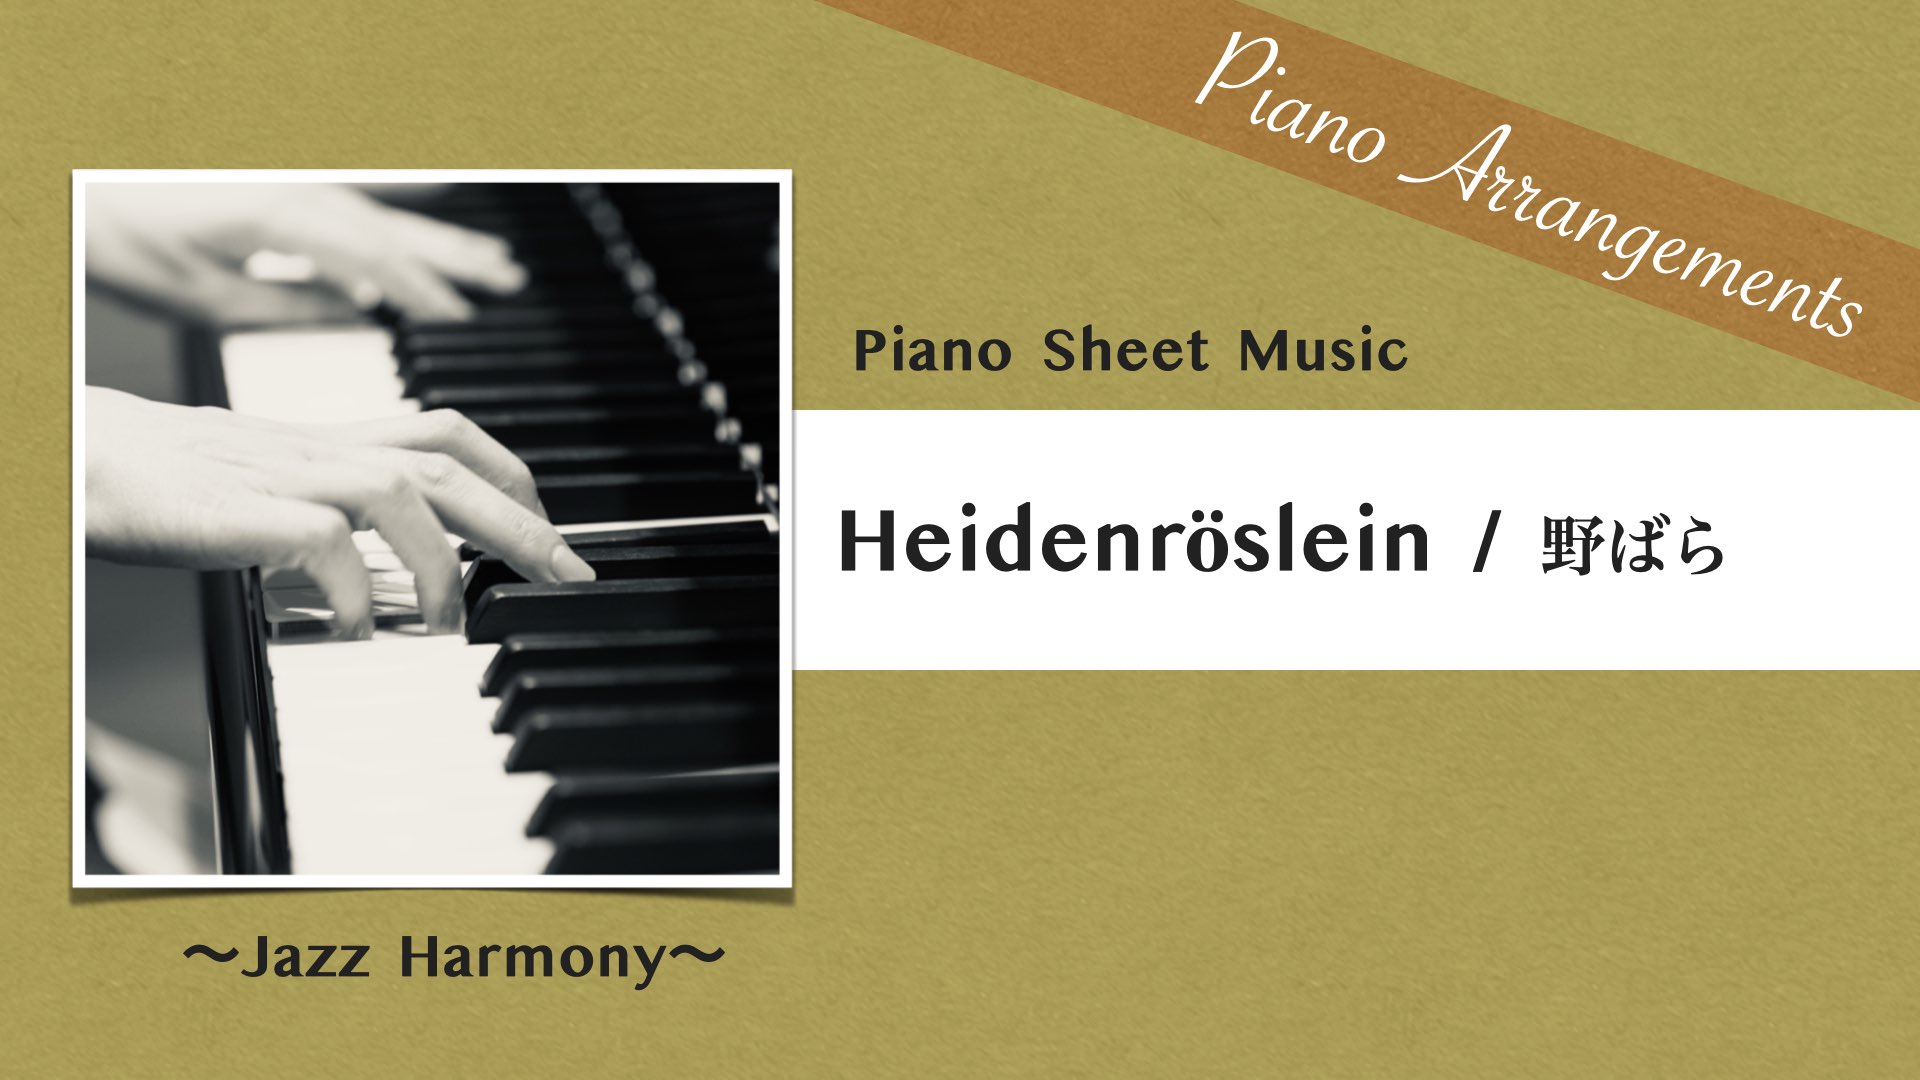 Heidenröslein by Schubert /Jazz Arrangement【Piano Sheet Music】